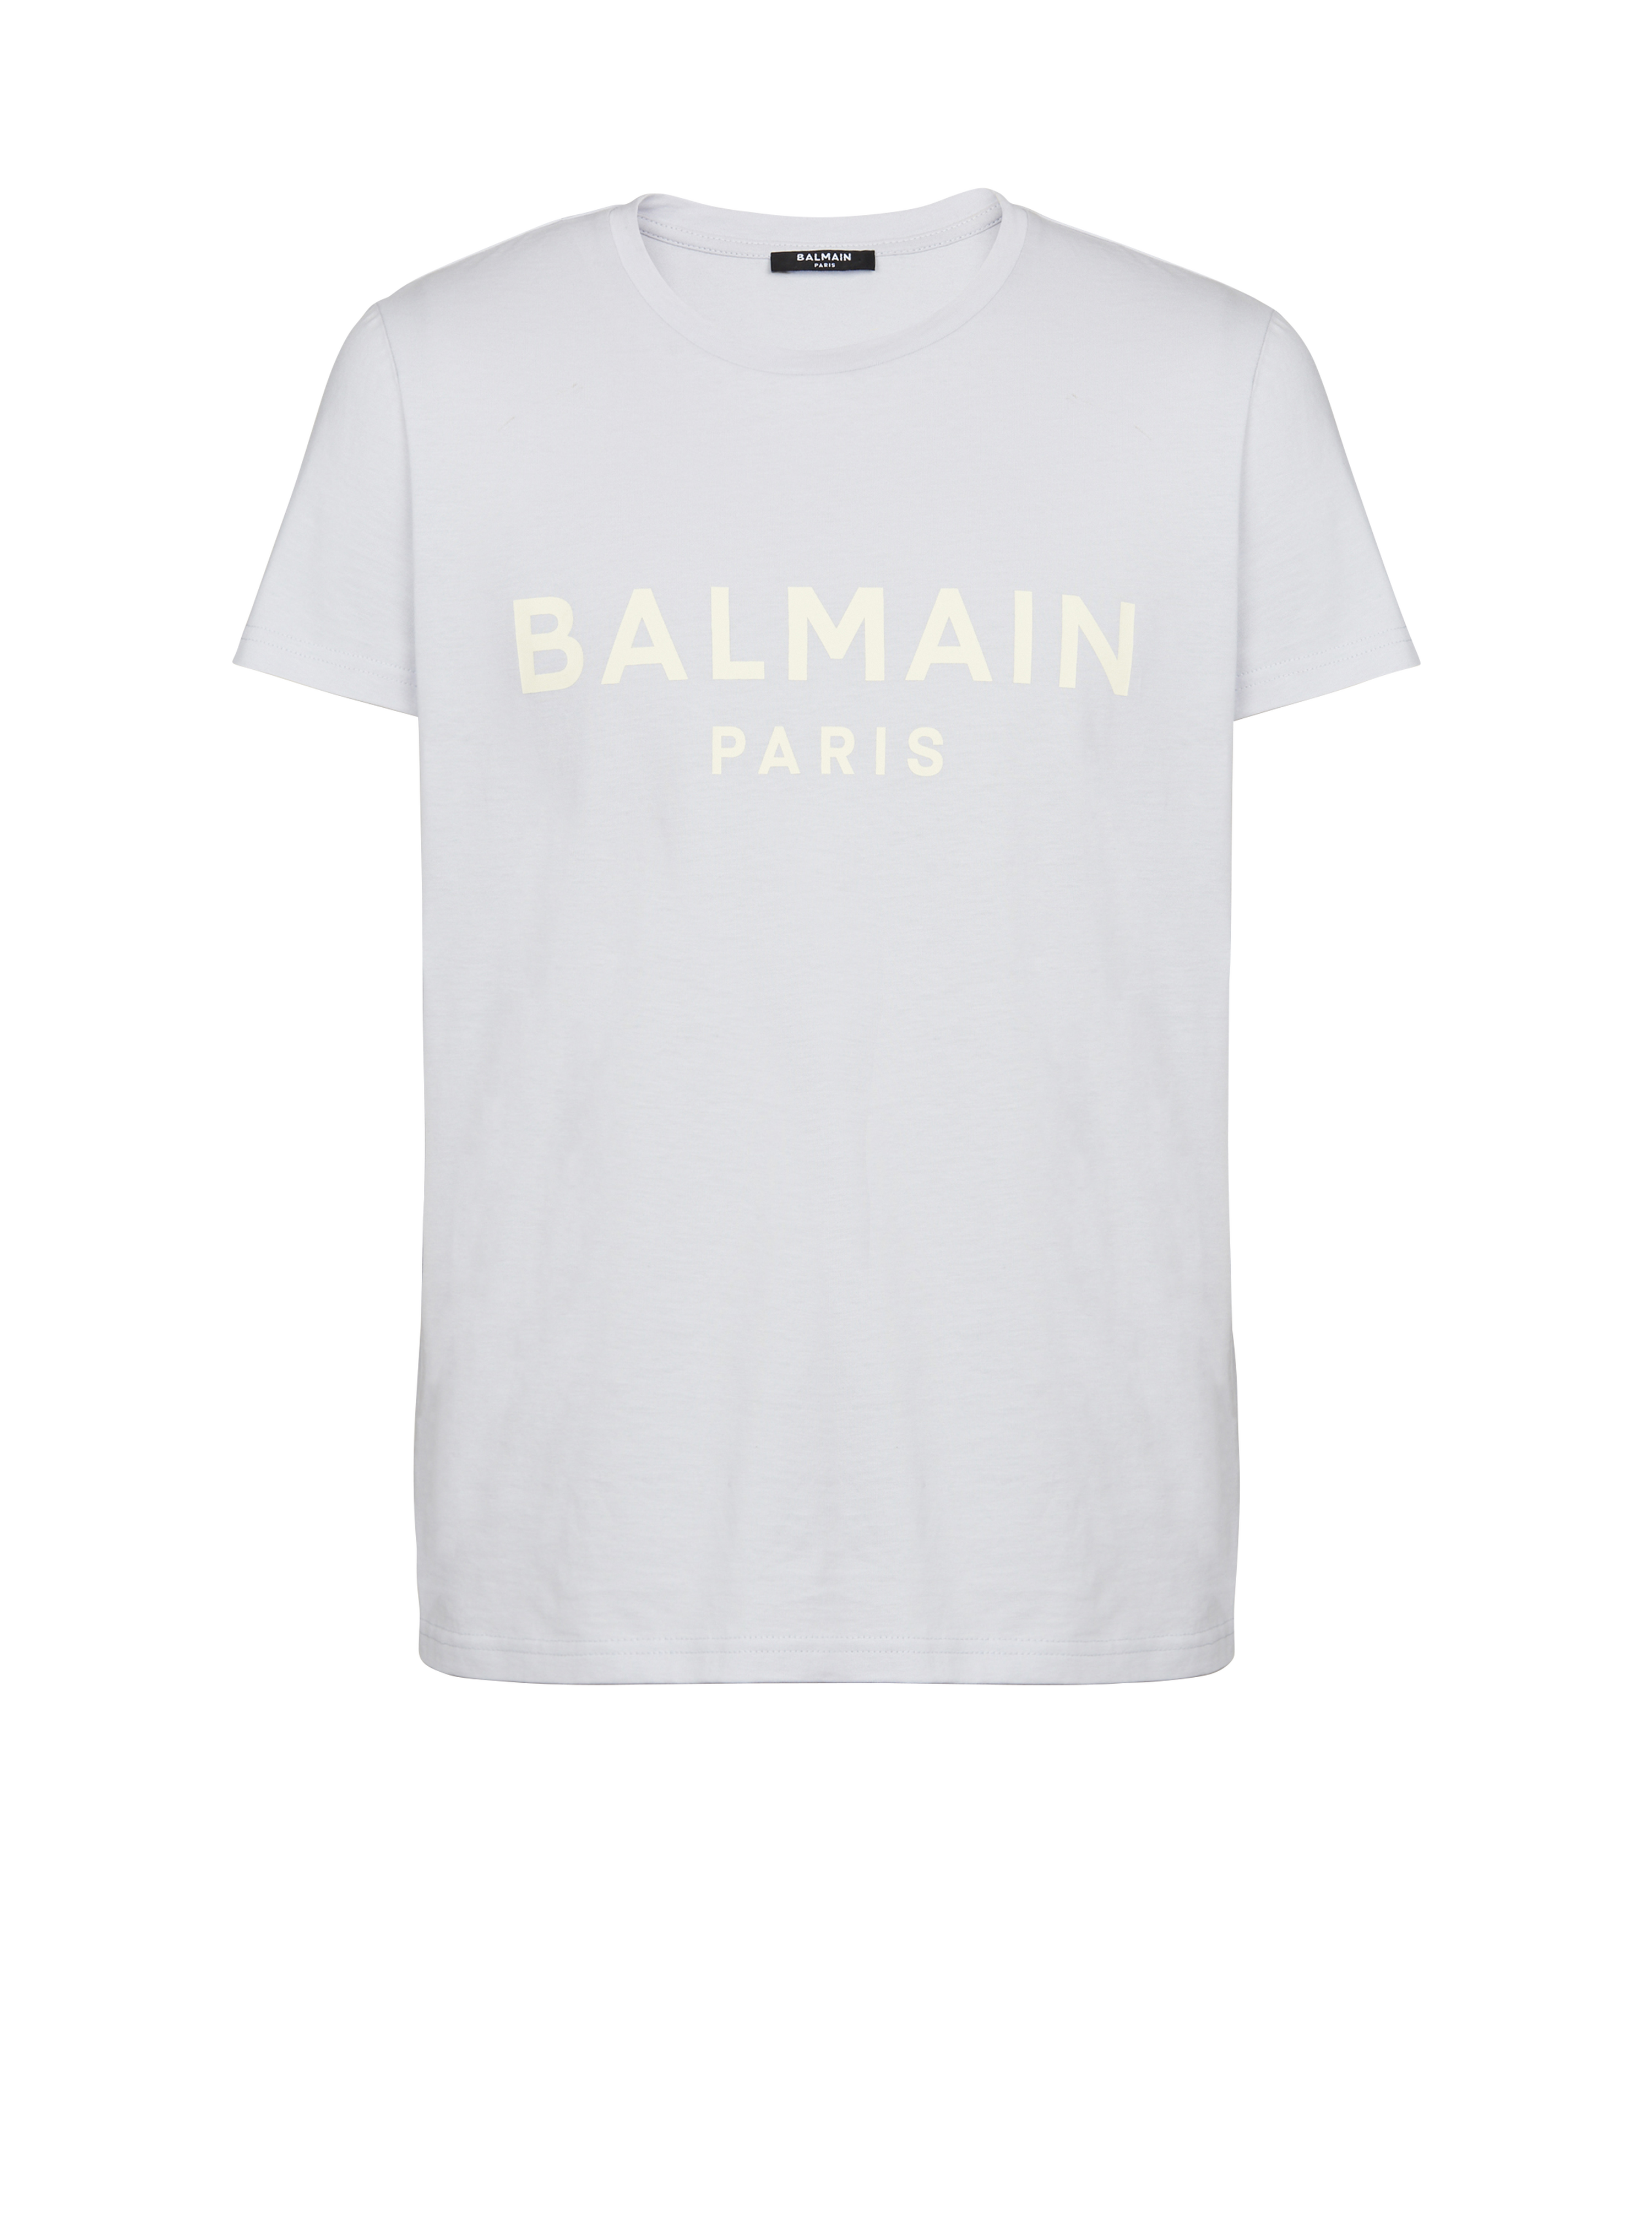 T-shirt en coton imprimé logo Balmain Paris, bleu